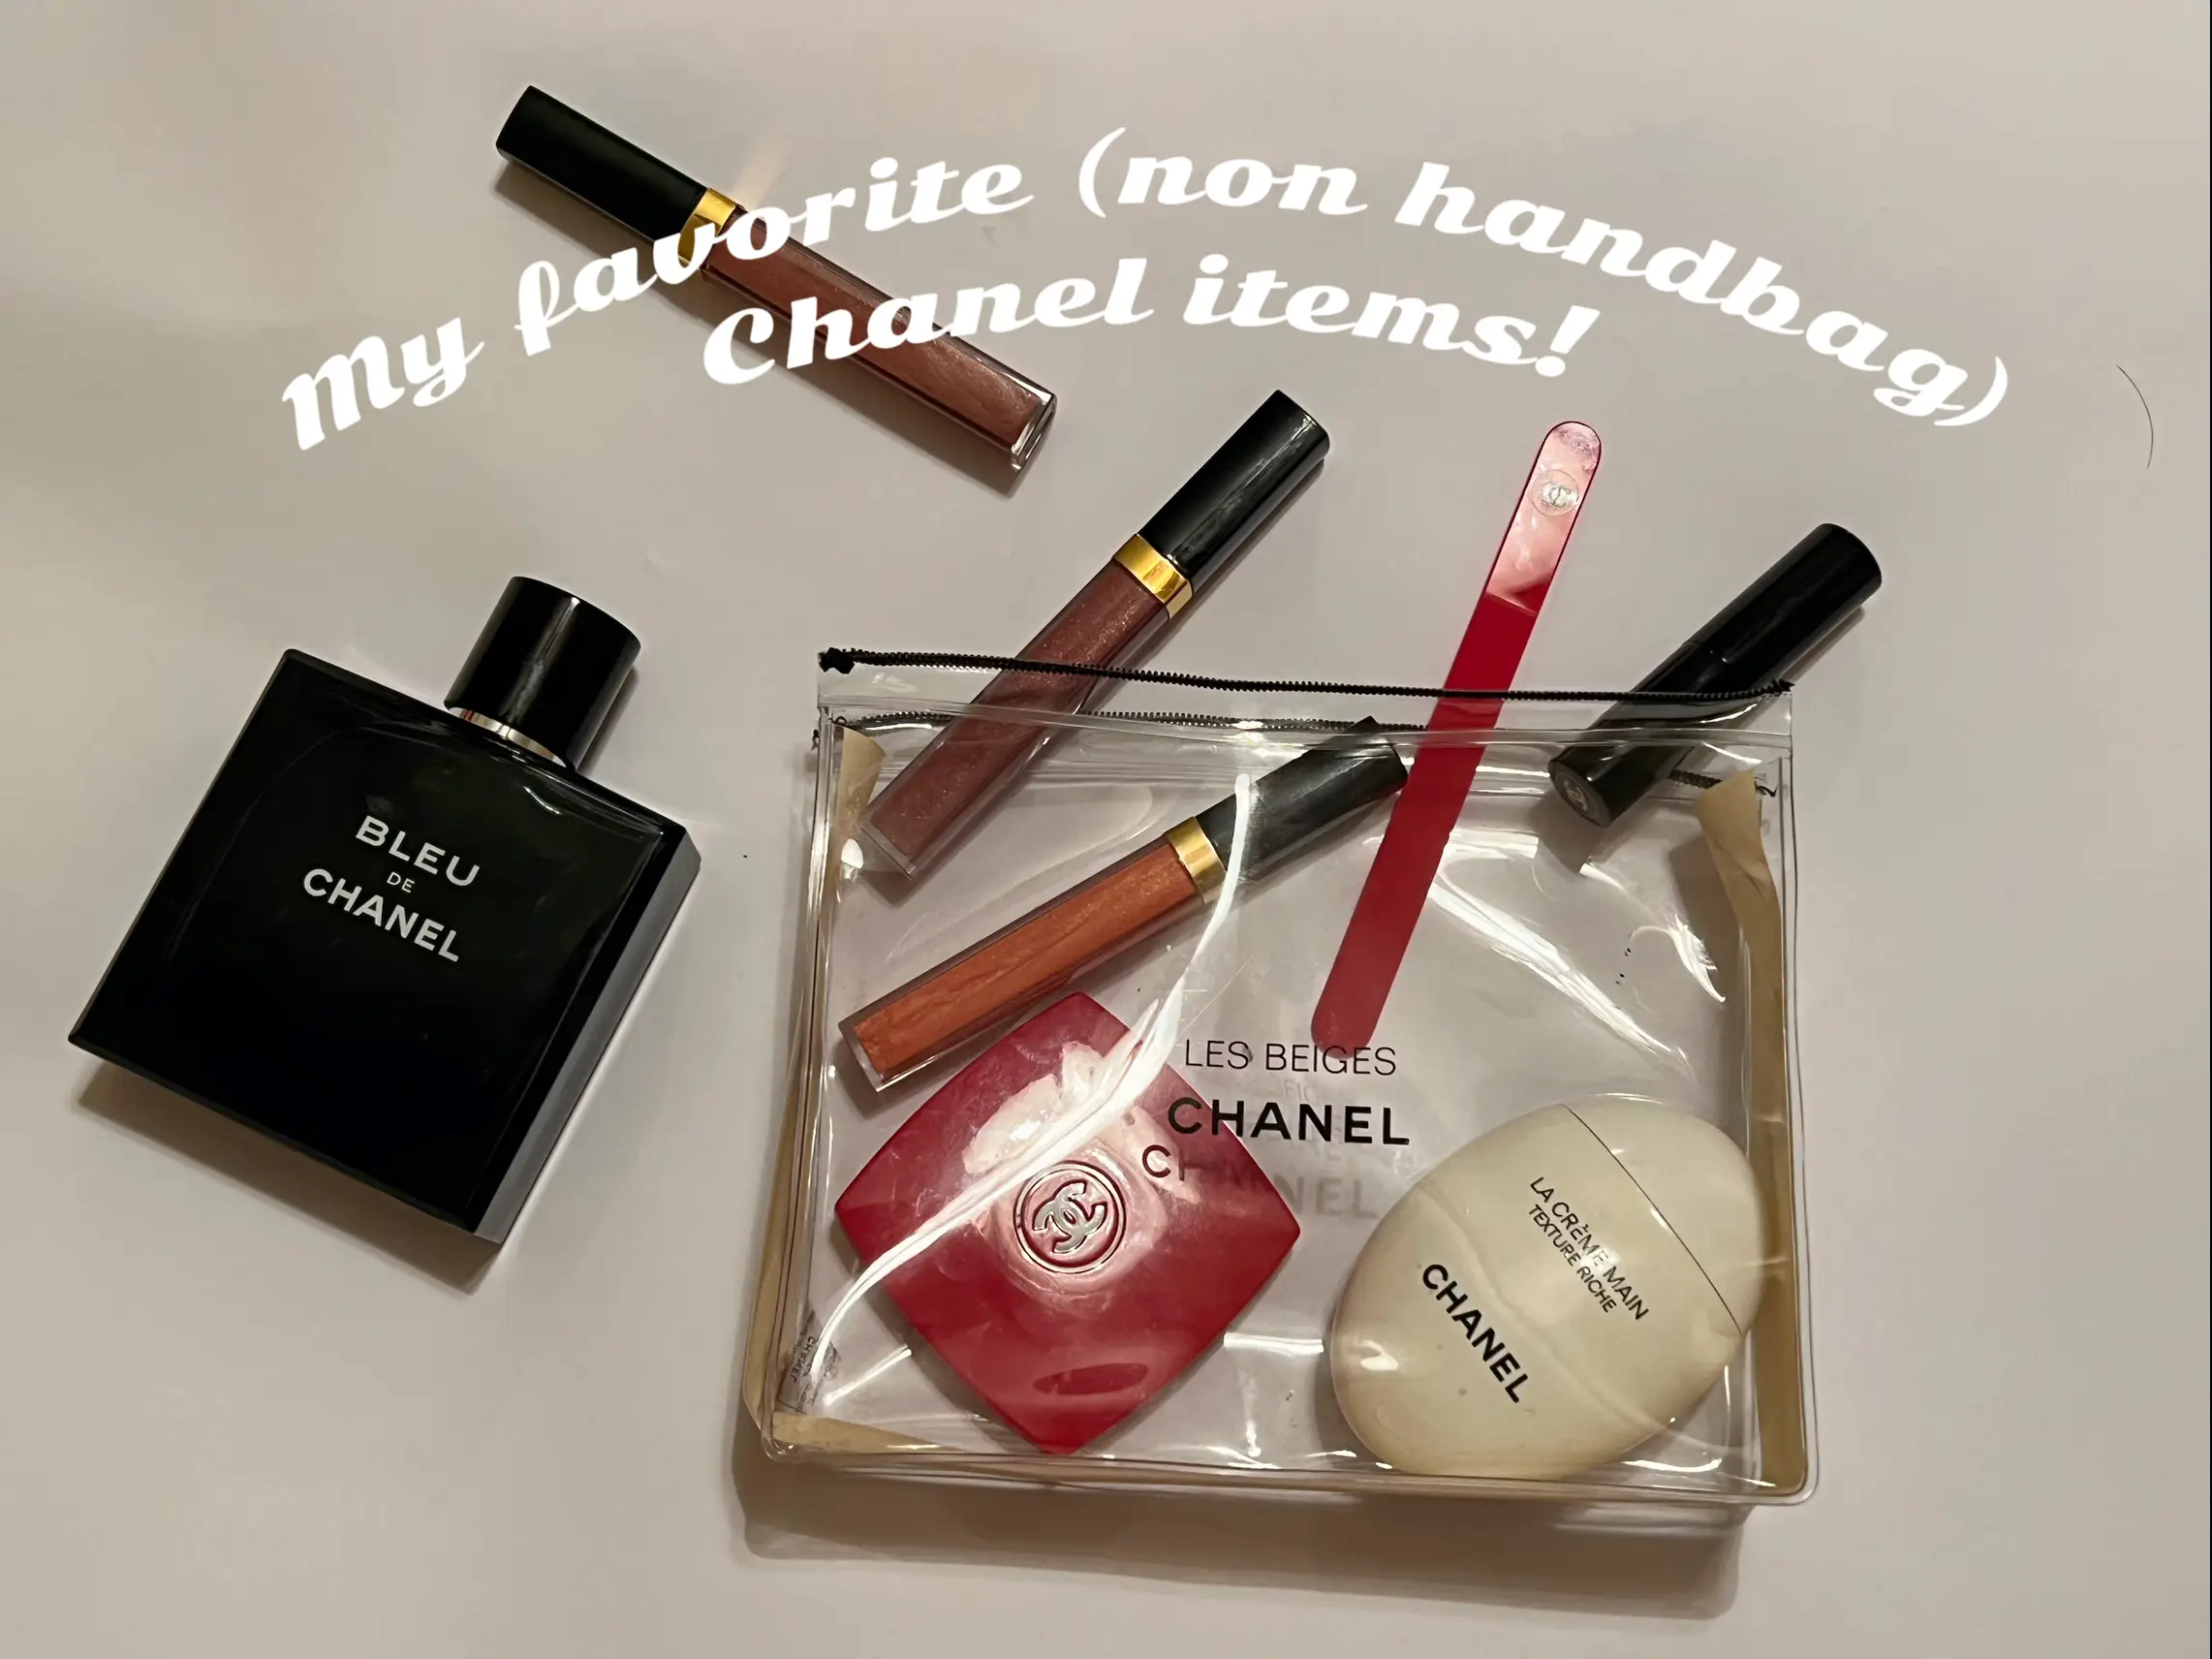 My favorite (non handbag) Chanel items!